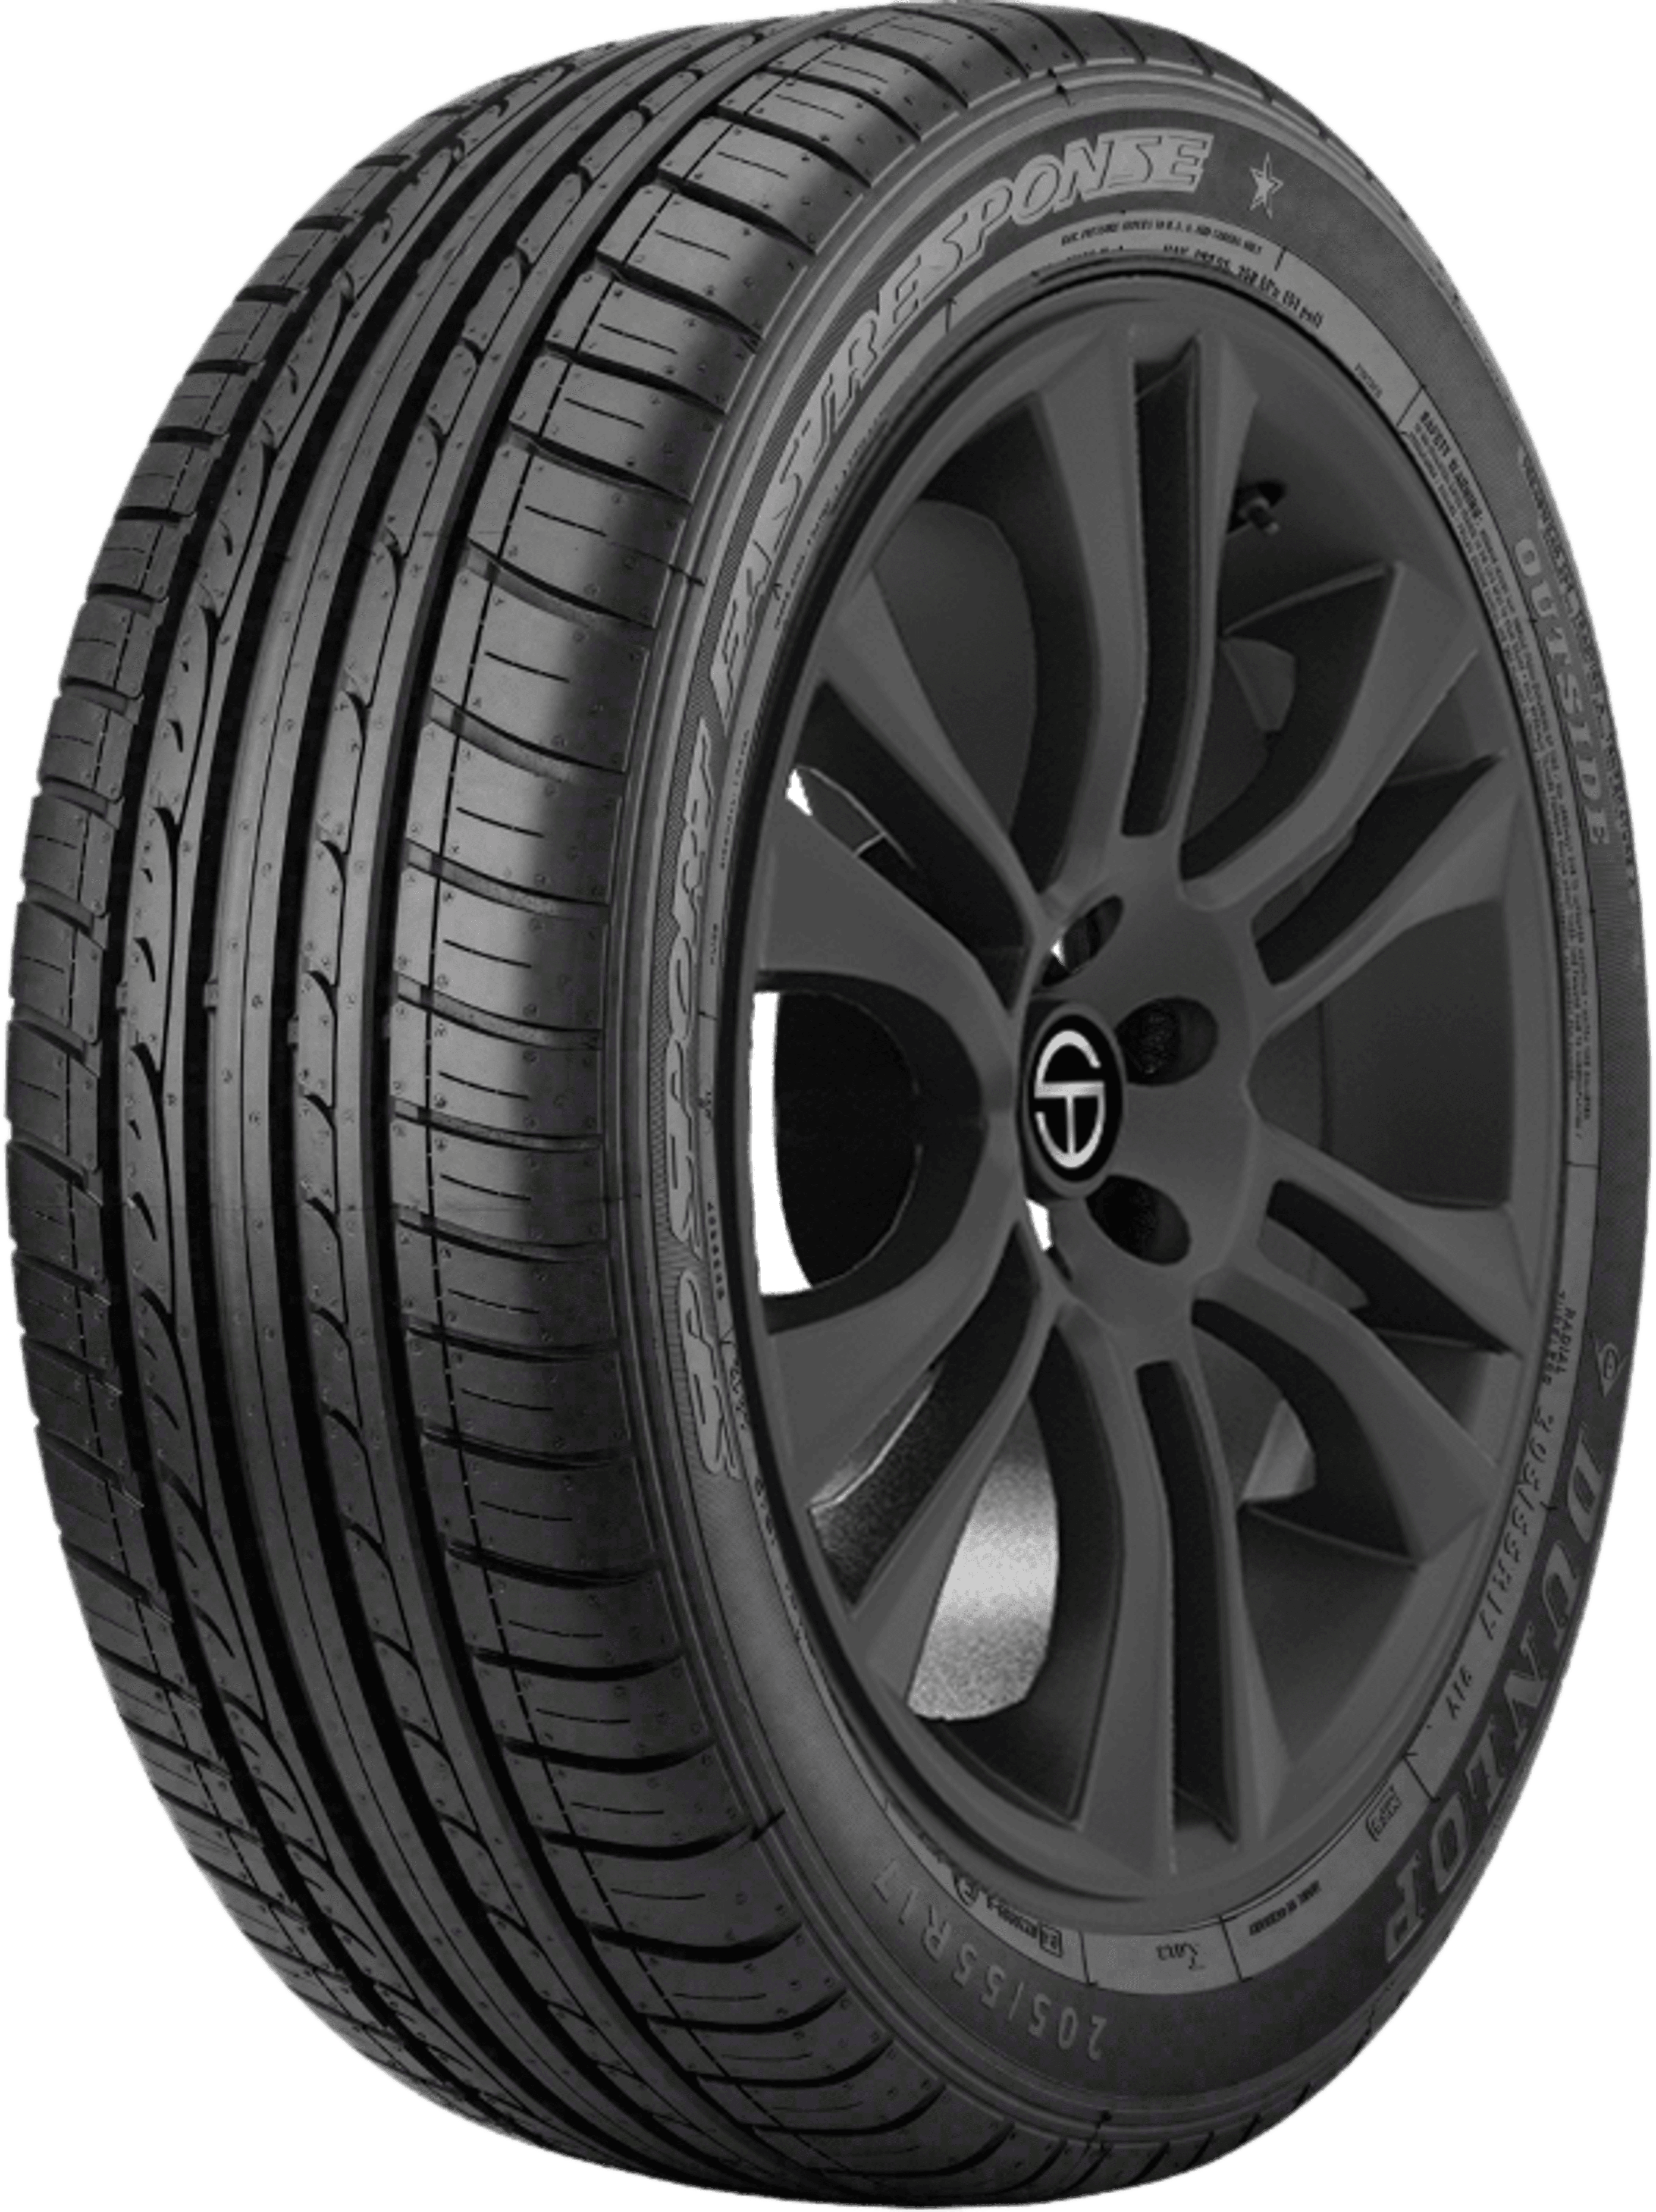 Buy Dunlop Sp Sport Fast Tires | SimpleTire Response Online